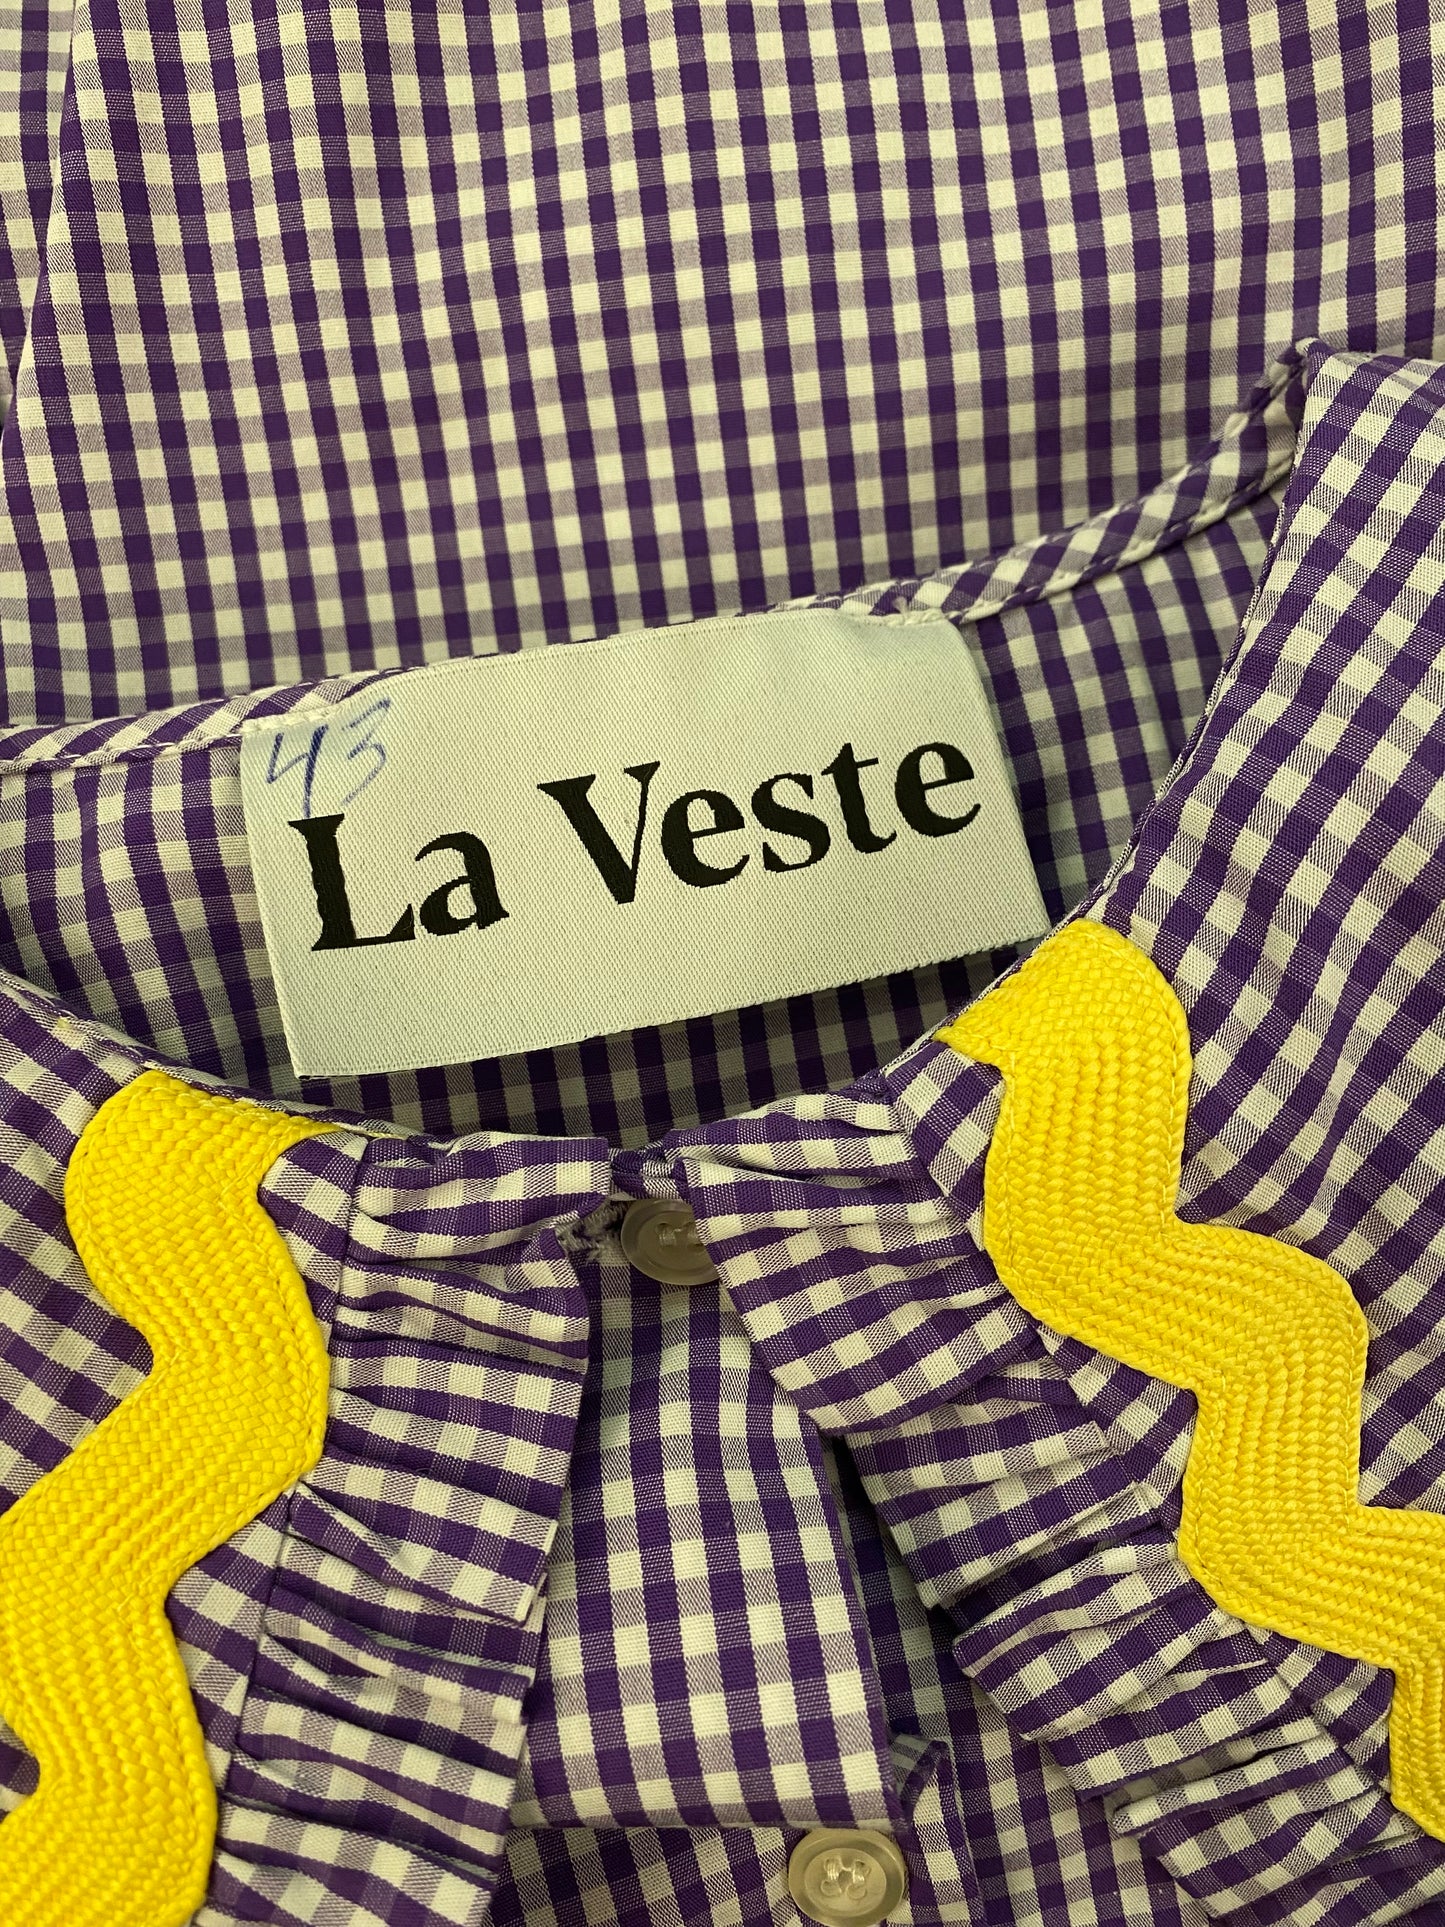 LA VESTE School Shirt Purple Size M